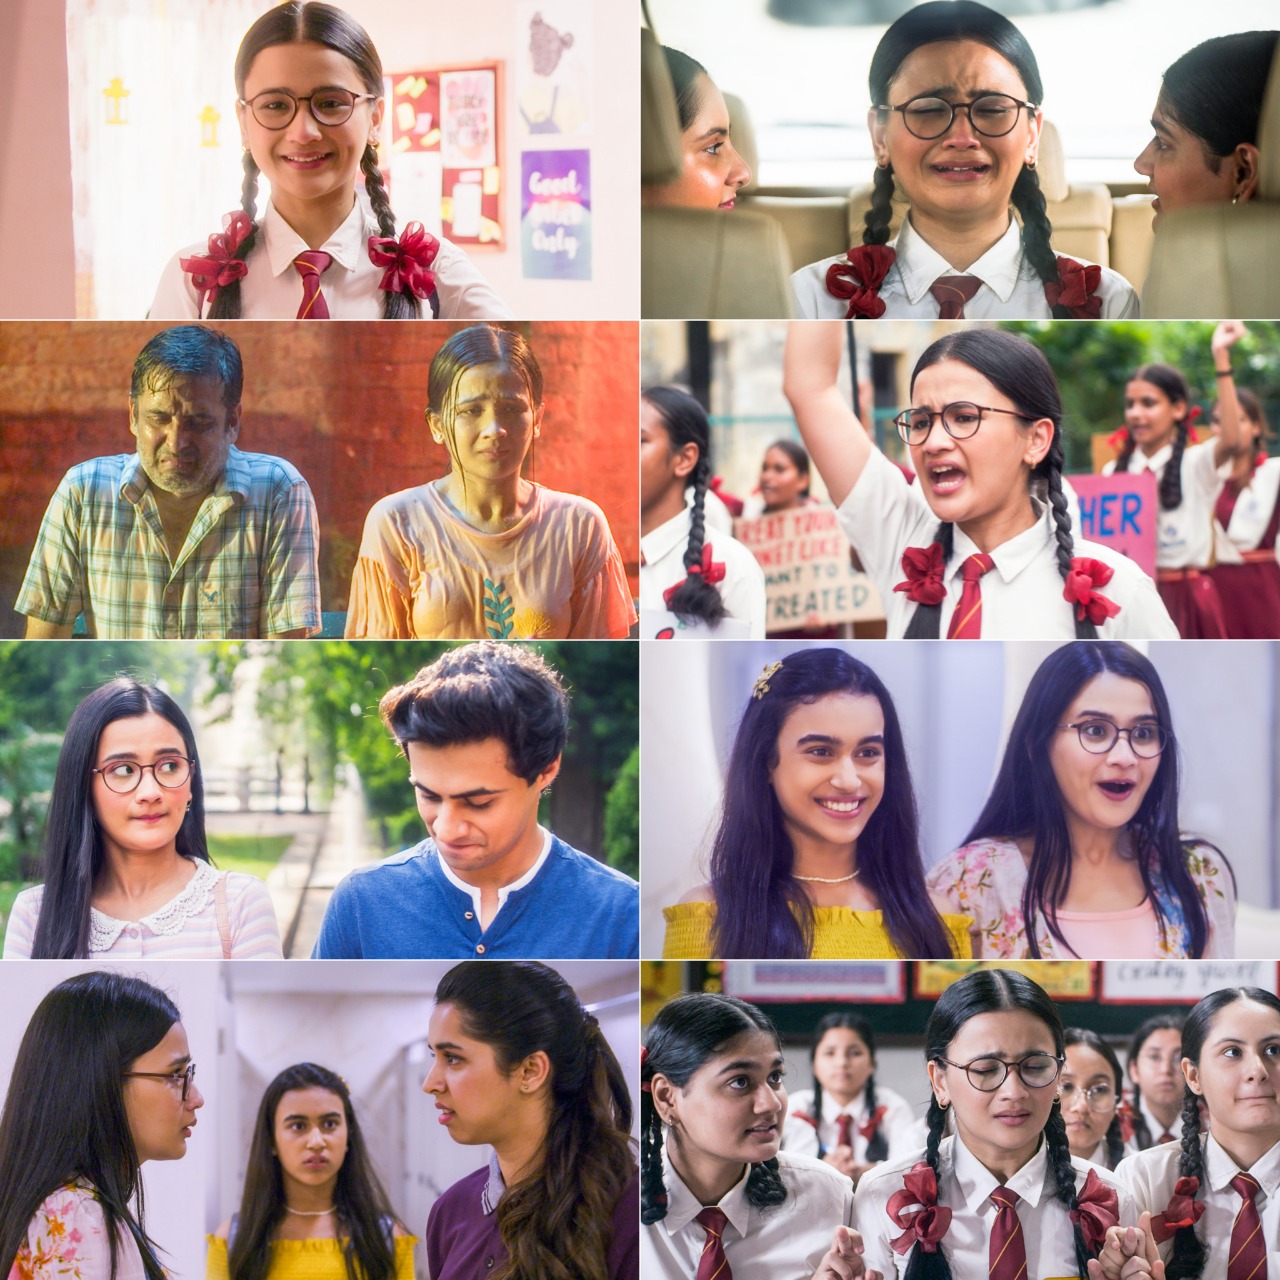 Amber Girls School S01 (2024) Hindi Completed Web Series HEVC ESub